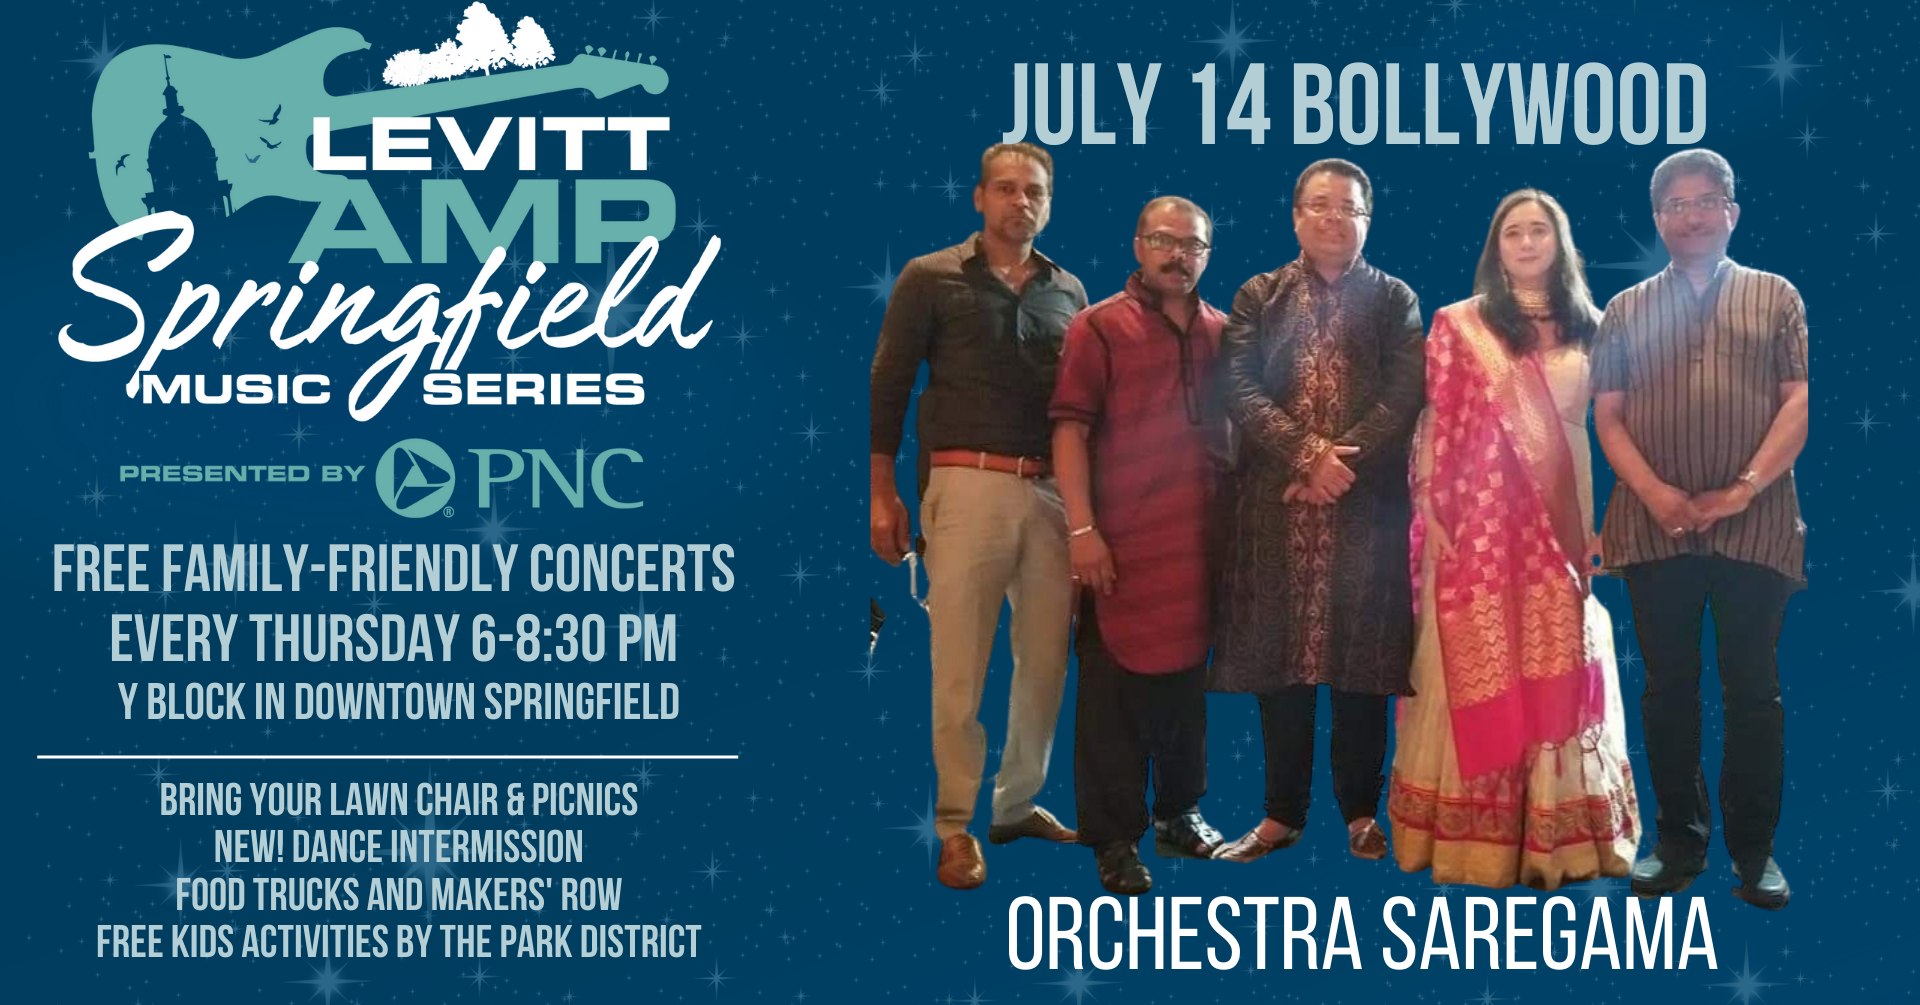 July 14 Bollywood Orchestra Saregama